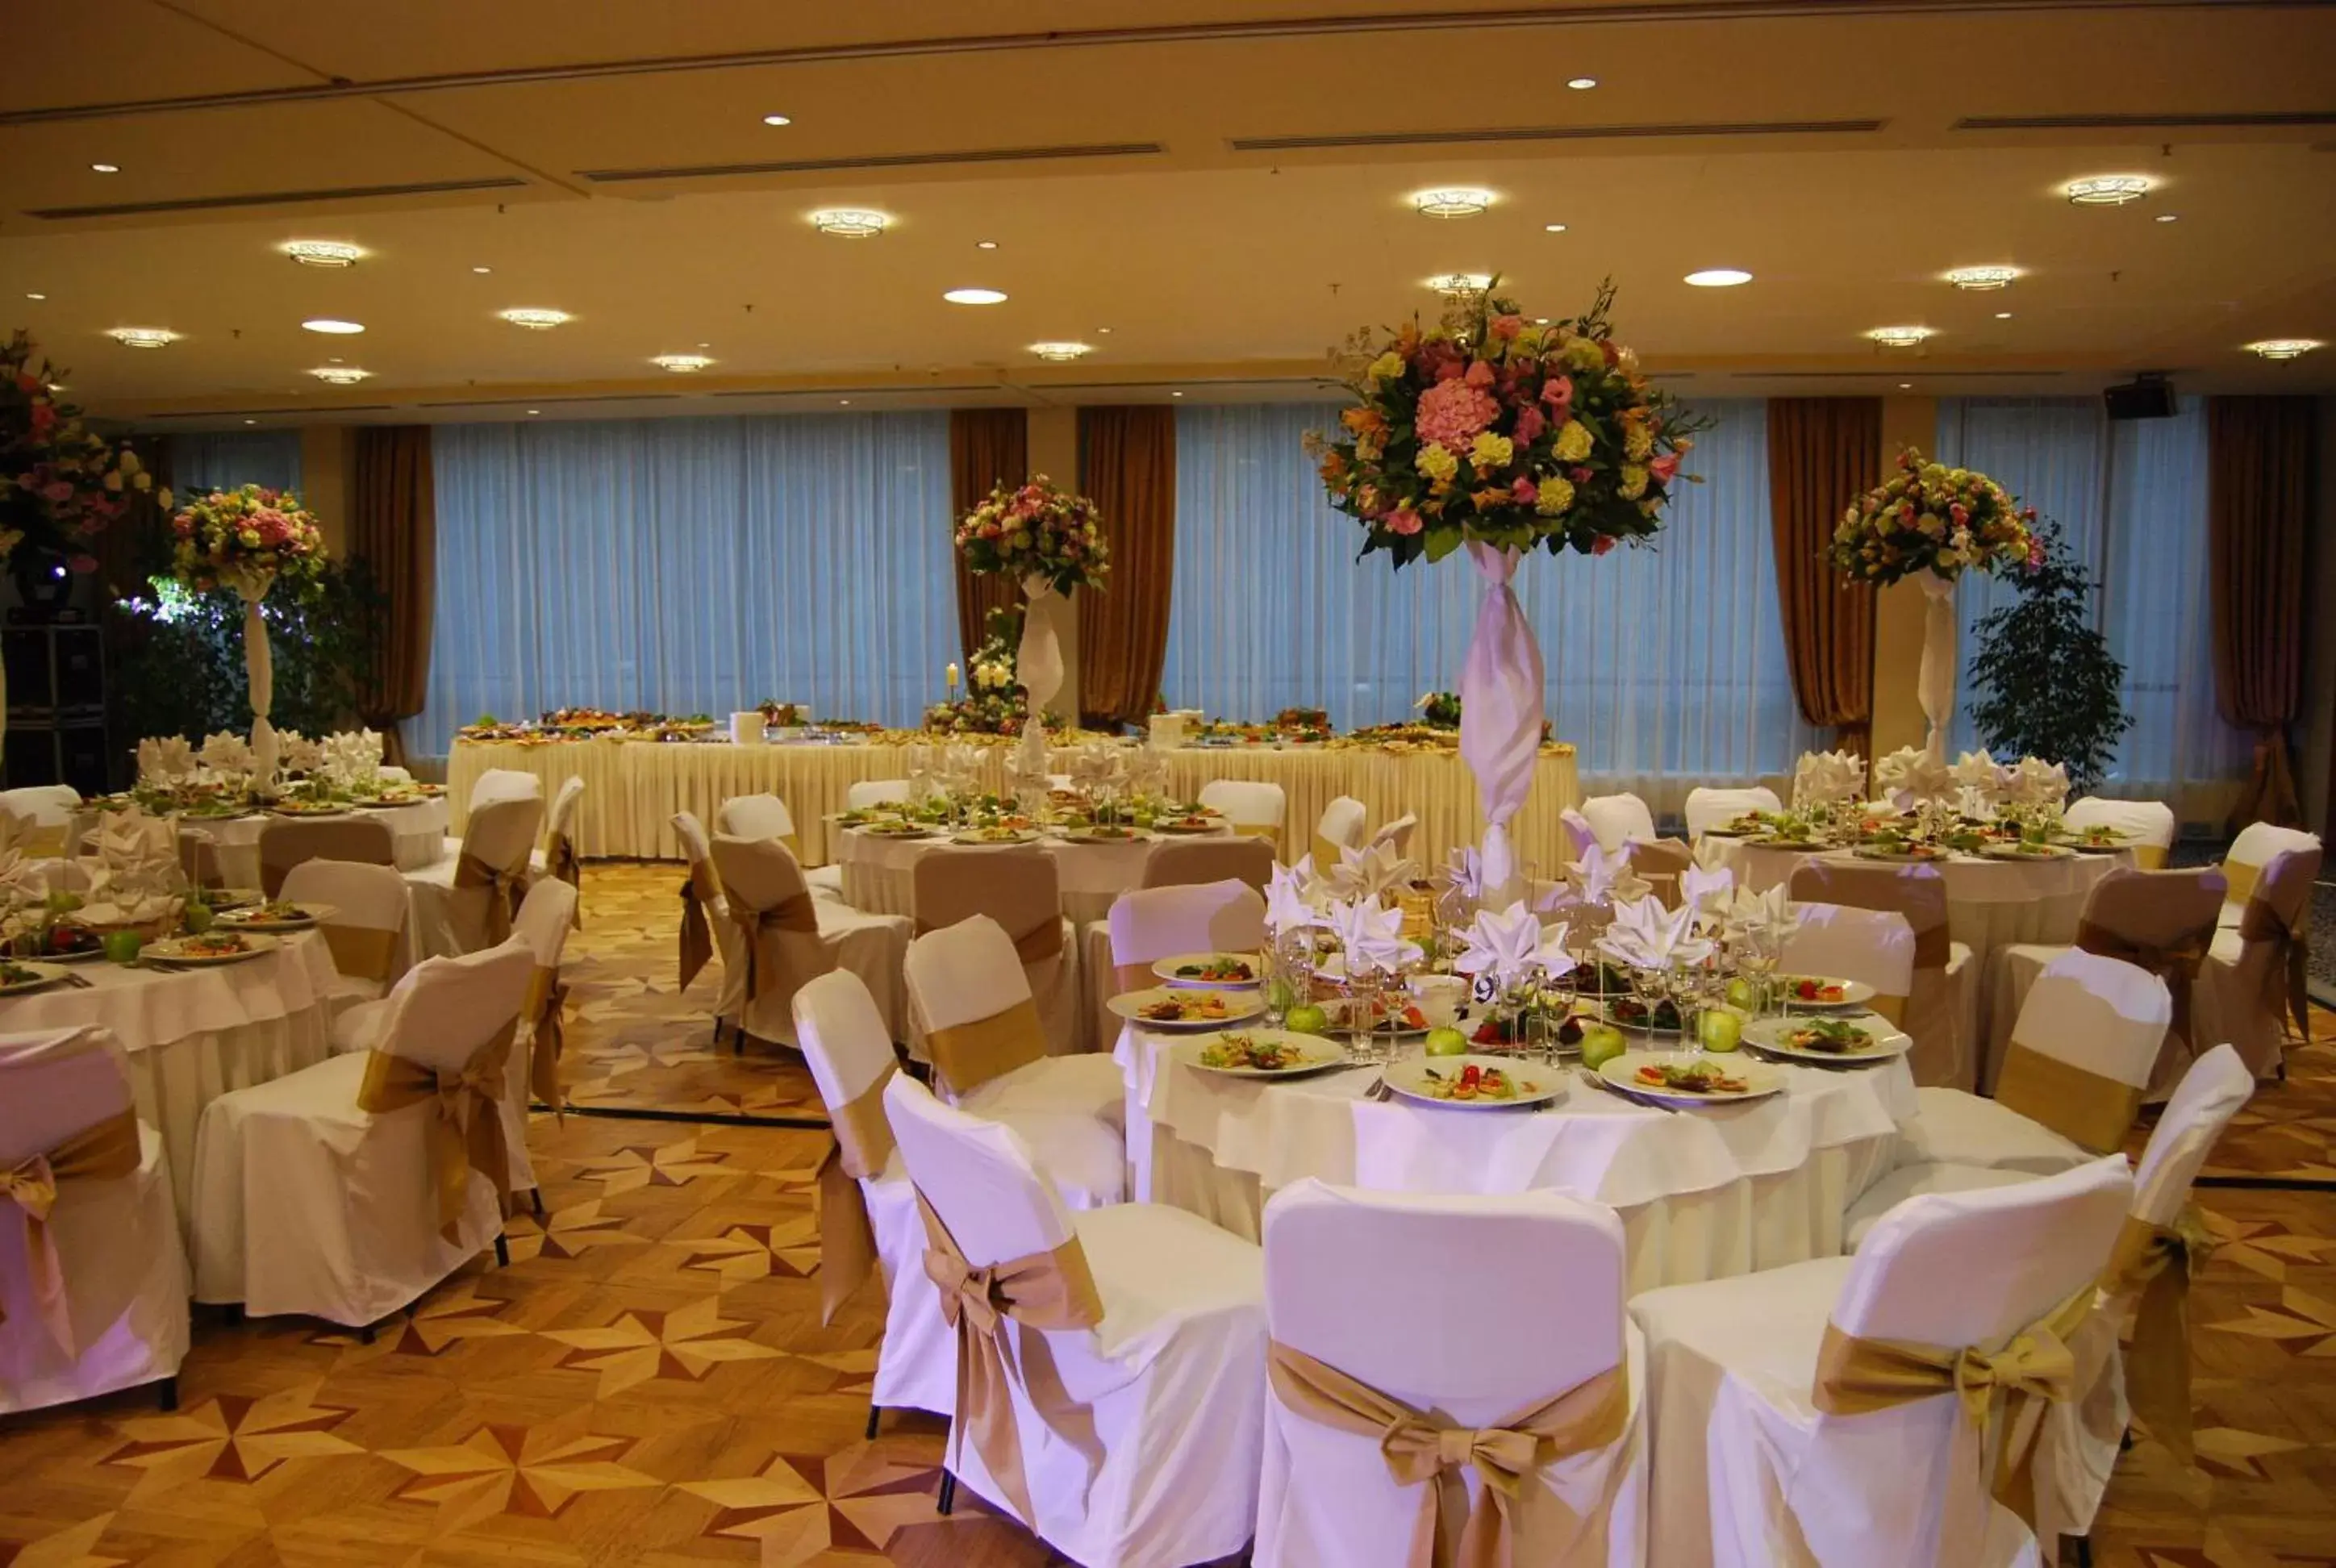 Banquet/Function facilities, Banquet Facilities in VILNIUS PARK PLAZA HOTEL, Restaurant, Bar, Conference & Banquet Center